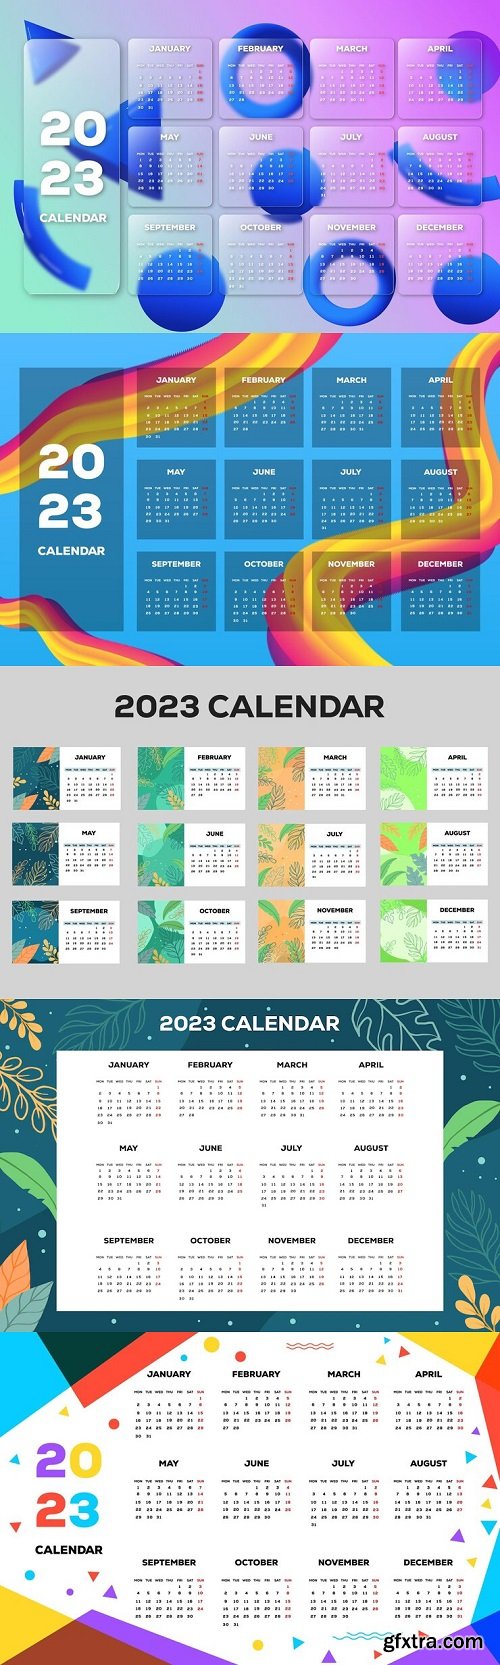 2023 new year calendar template